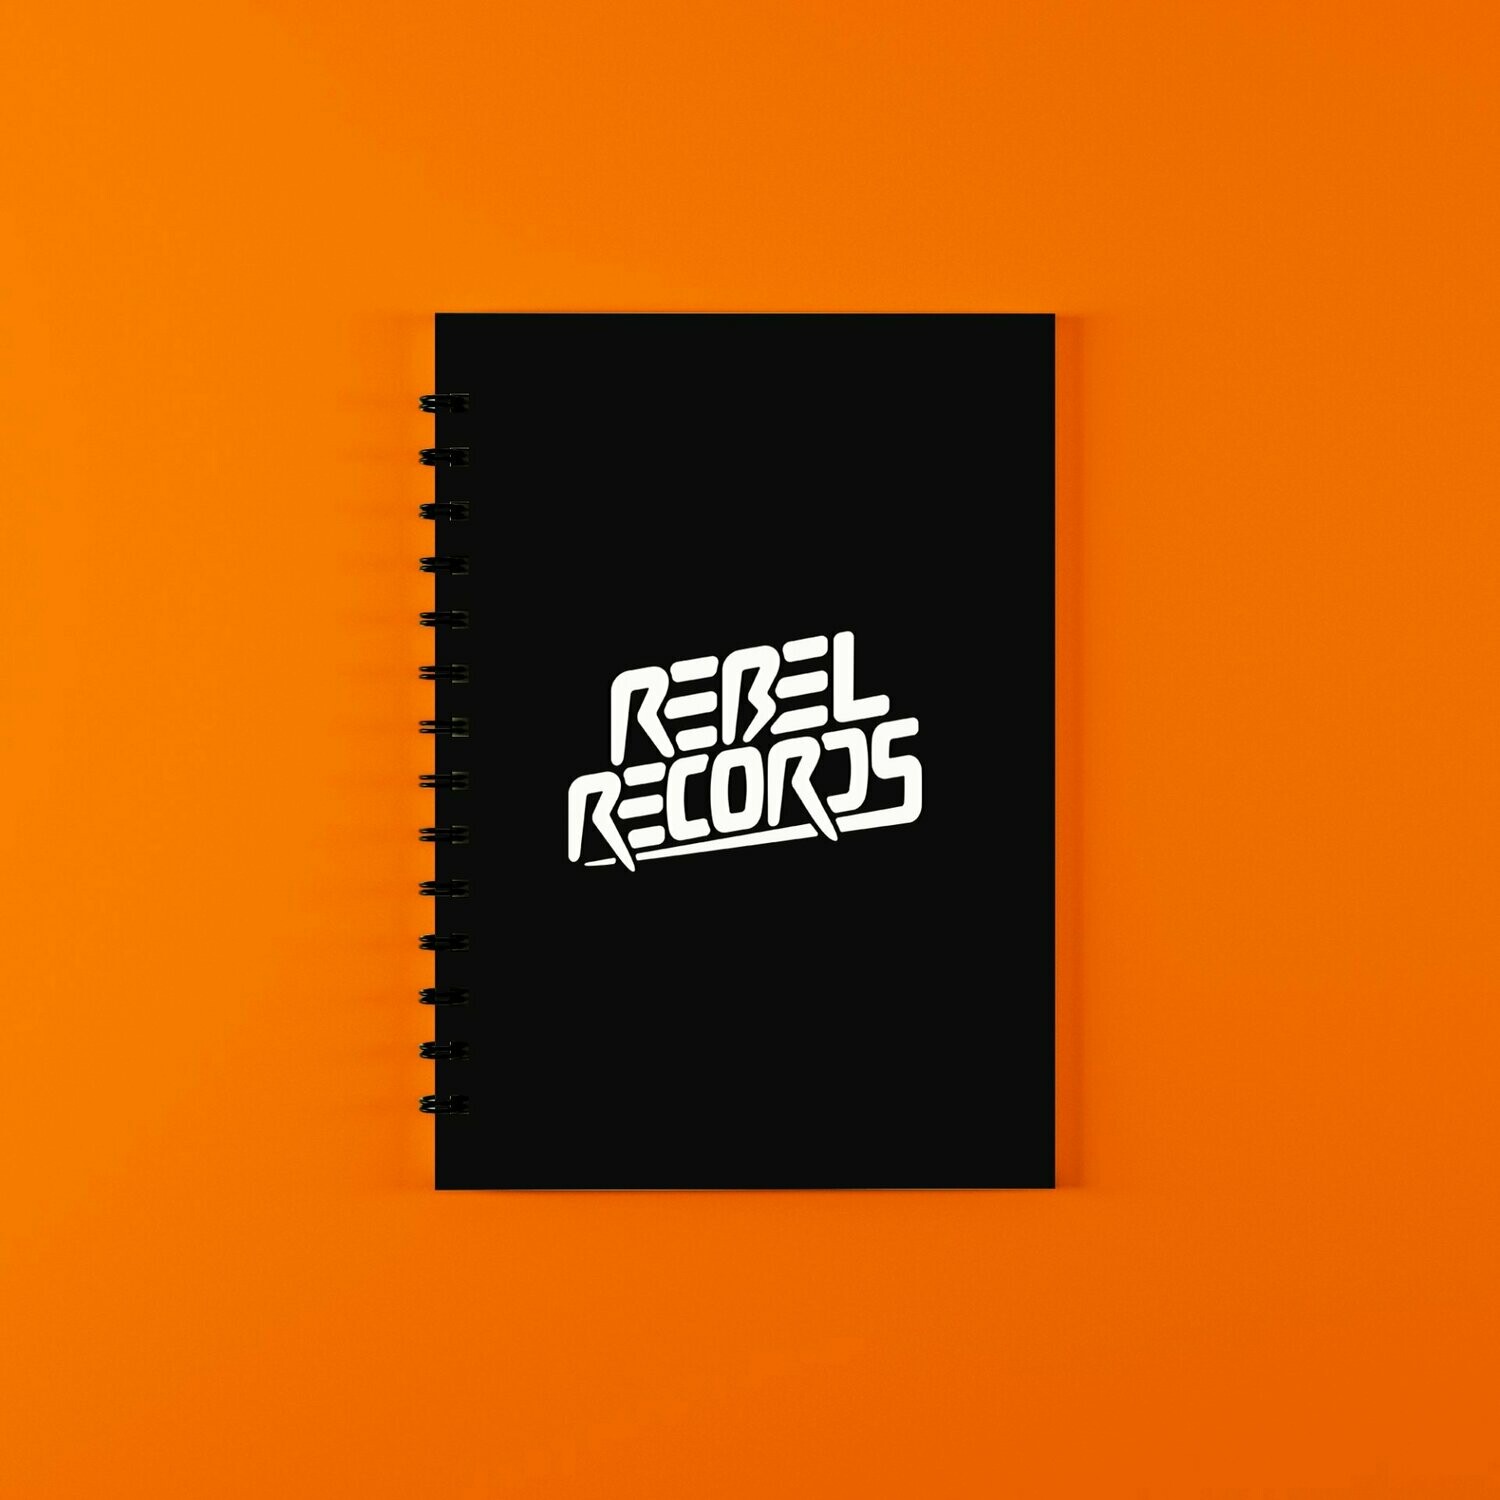 Black Rebel Records Notepad